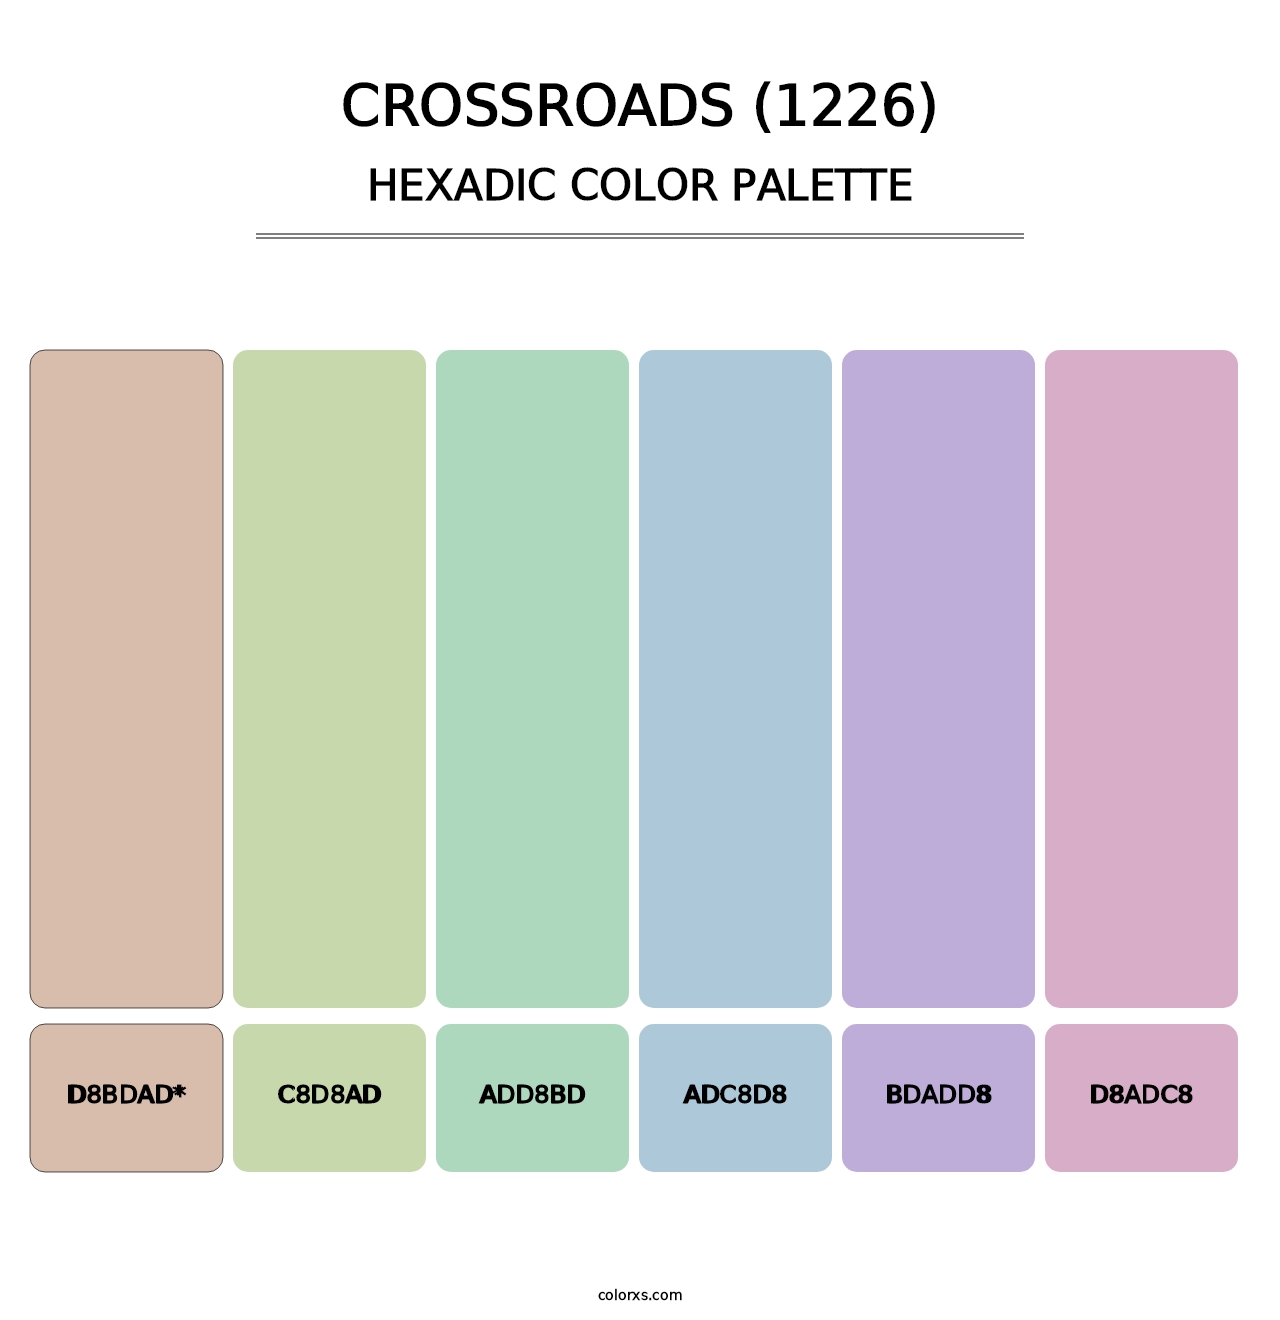 Crossroads (1226) - Hexadic Color Palette